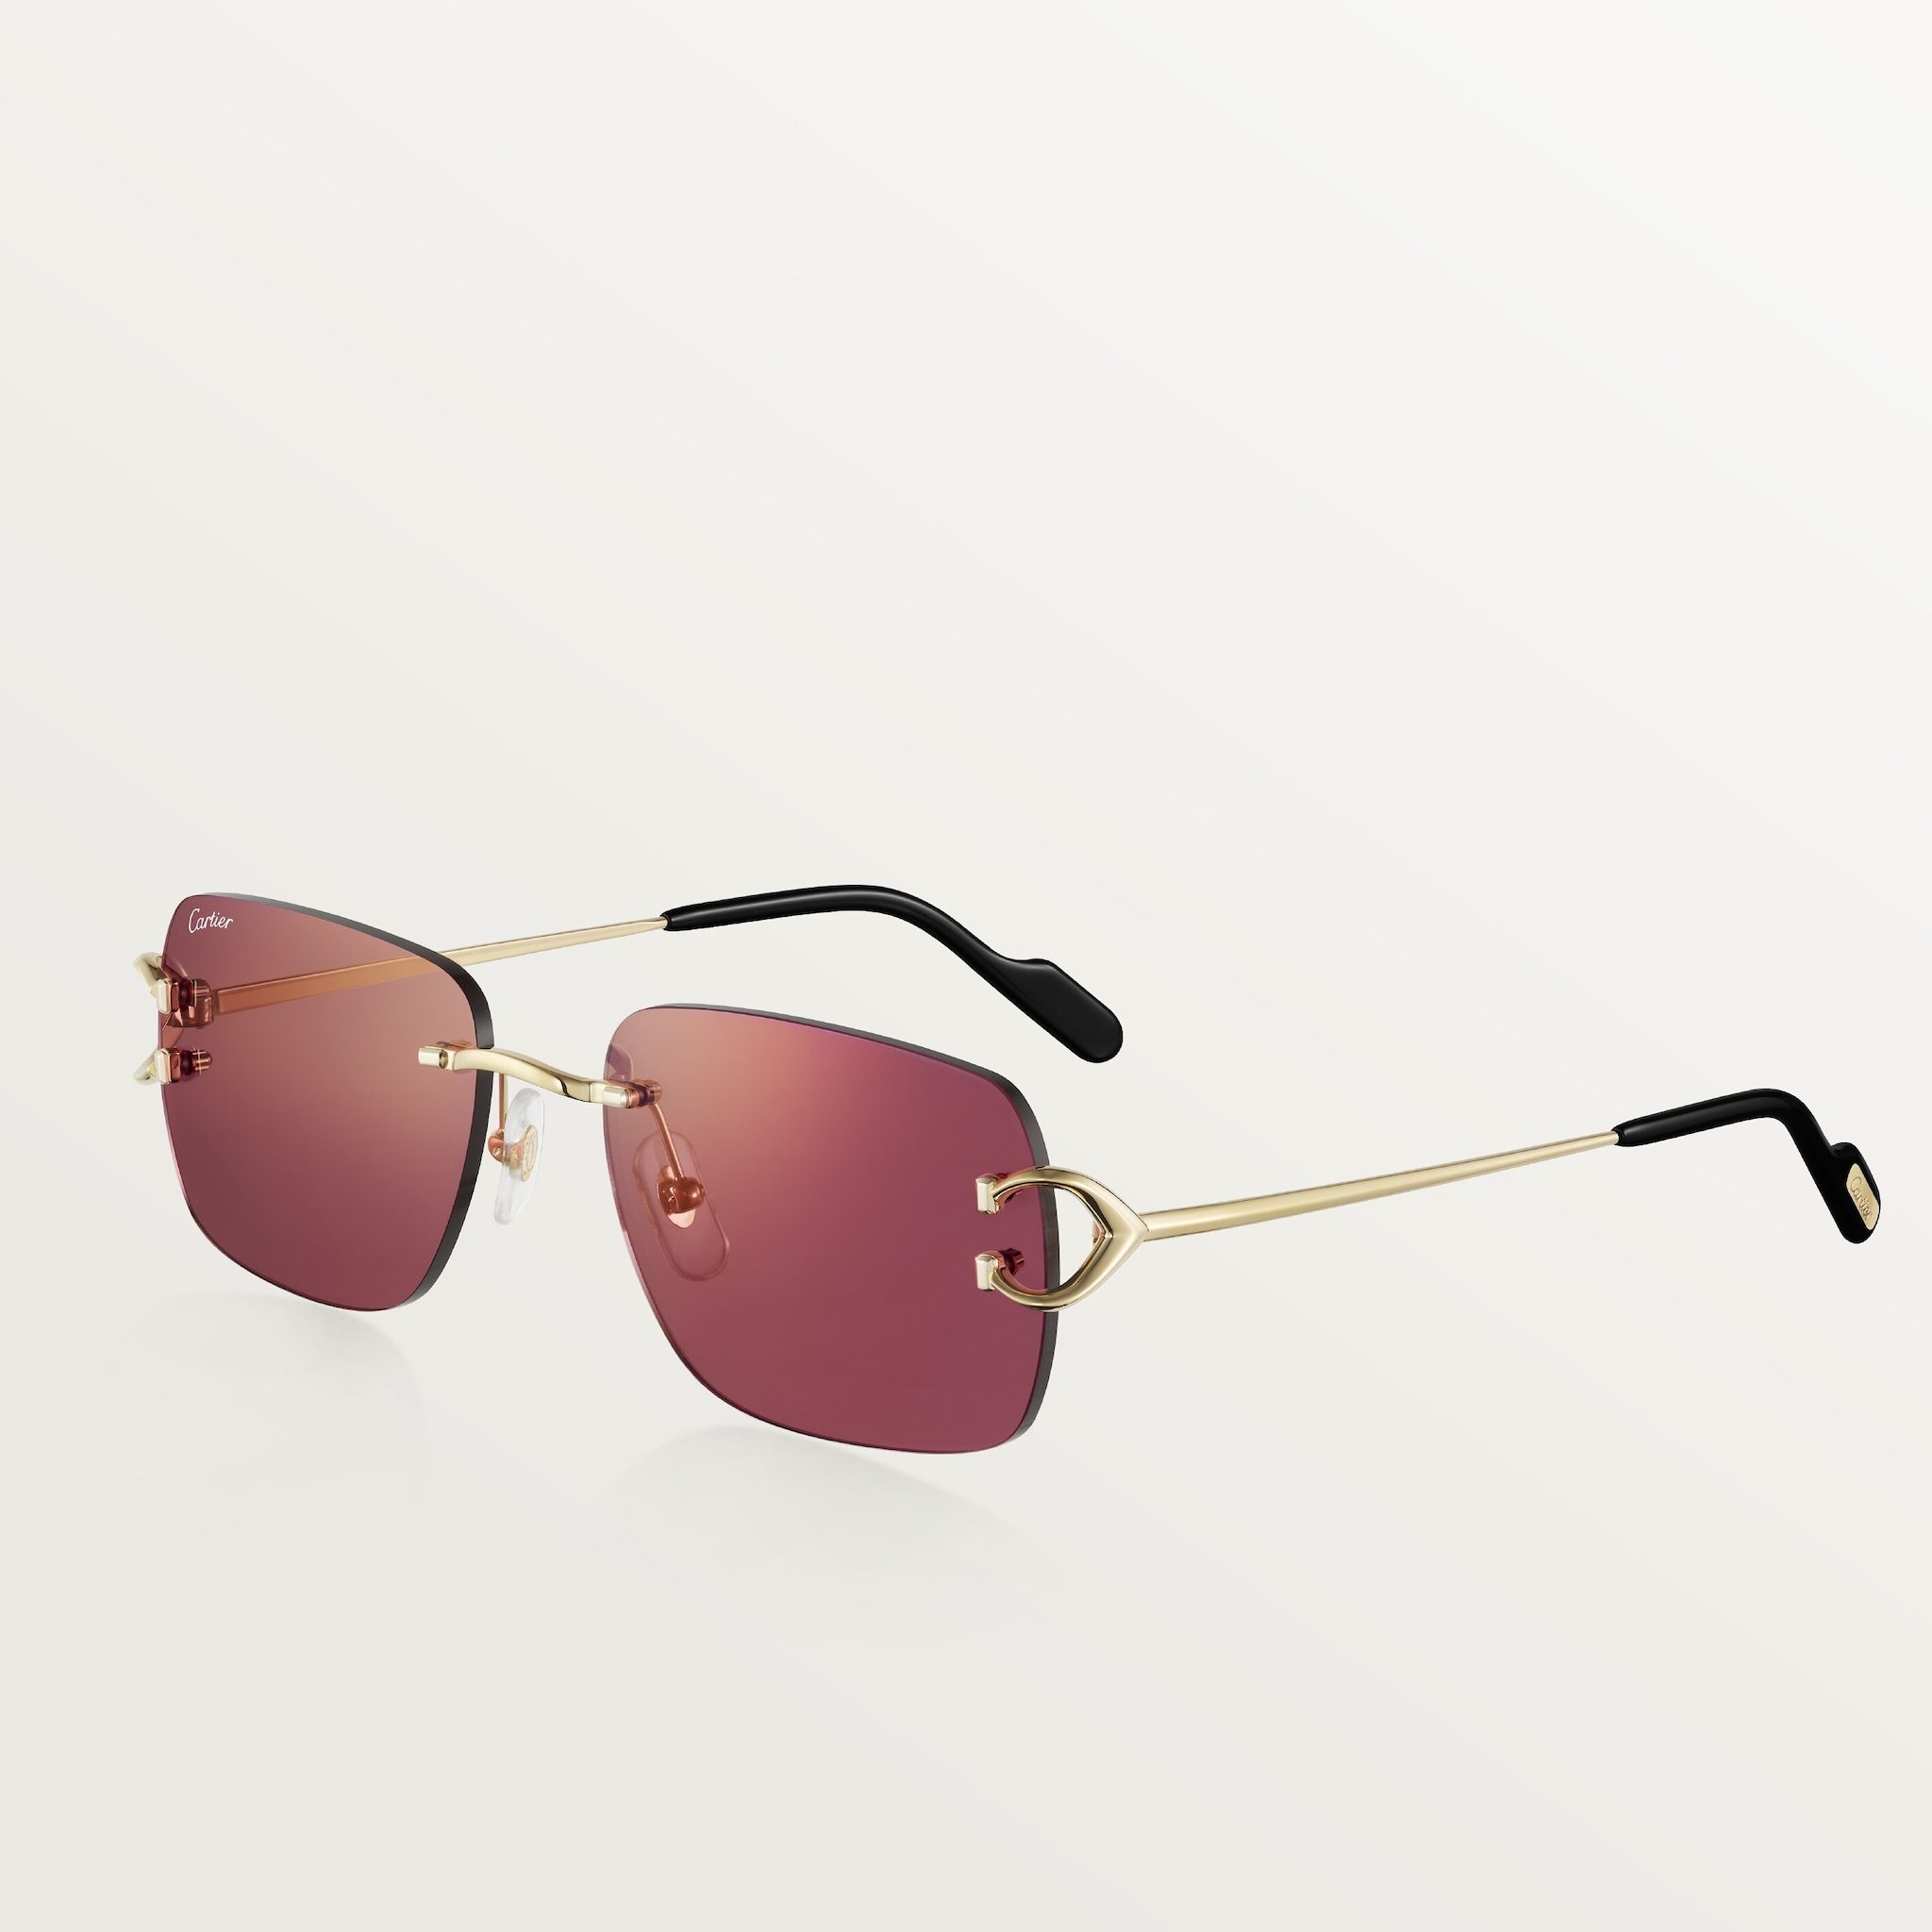 Signature C de Cartier sunglassesSmooth golden-finish metal, burgundy lenses